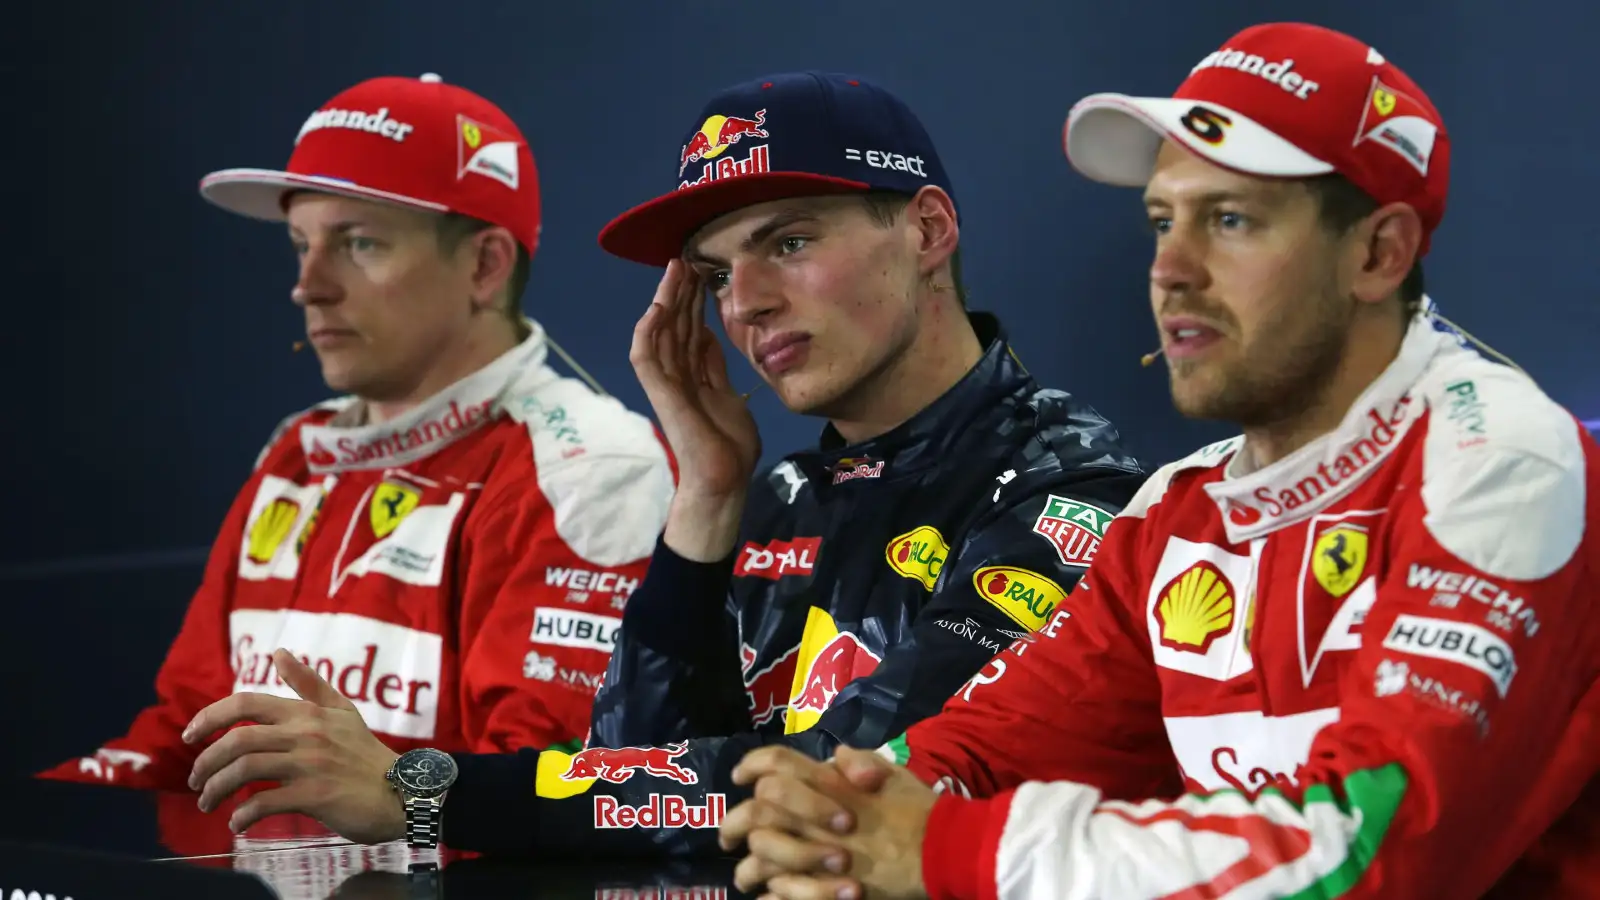 Kimi Raikkonen, Sebastian Vettel, and Max Verstappen pictured in 2016. Team radio